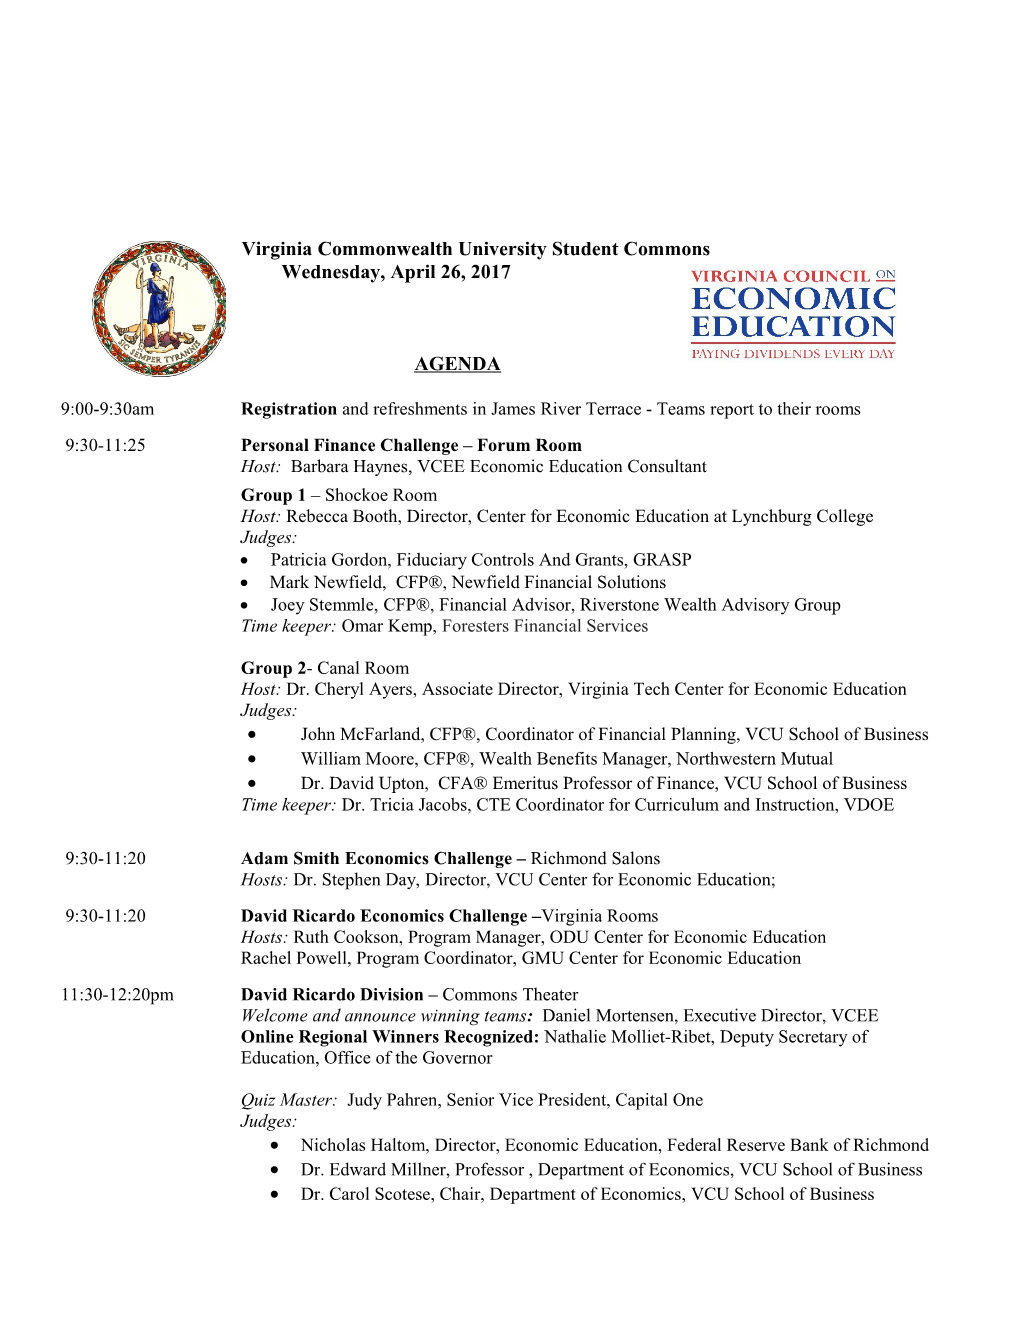 Virginia Council on Economic Education